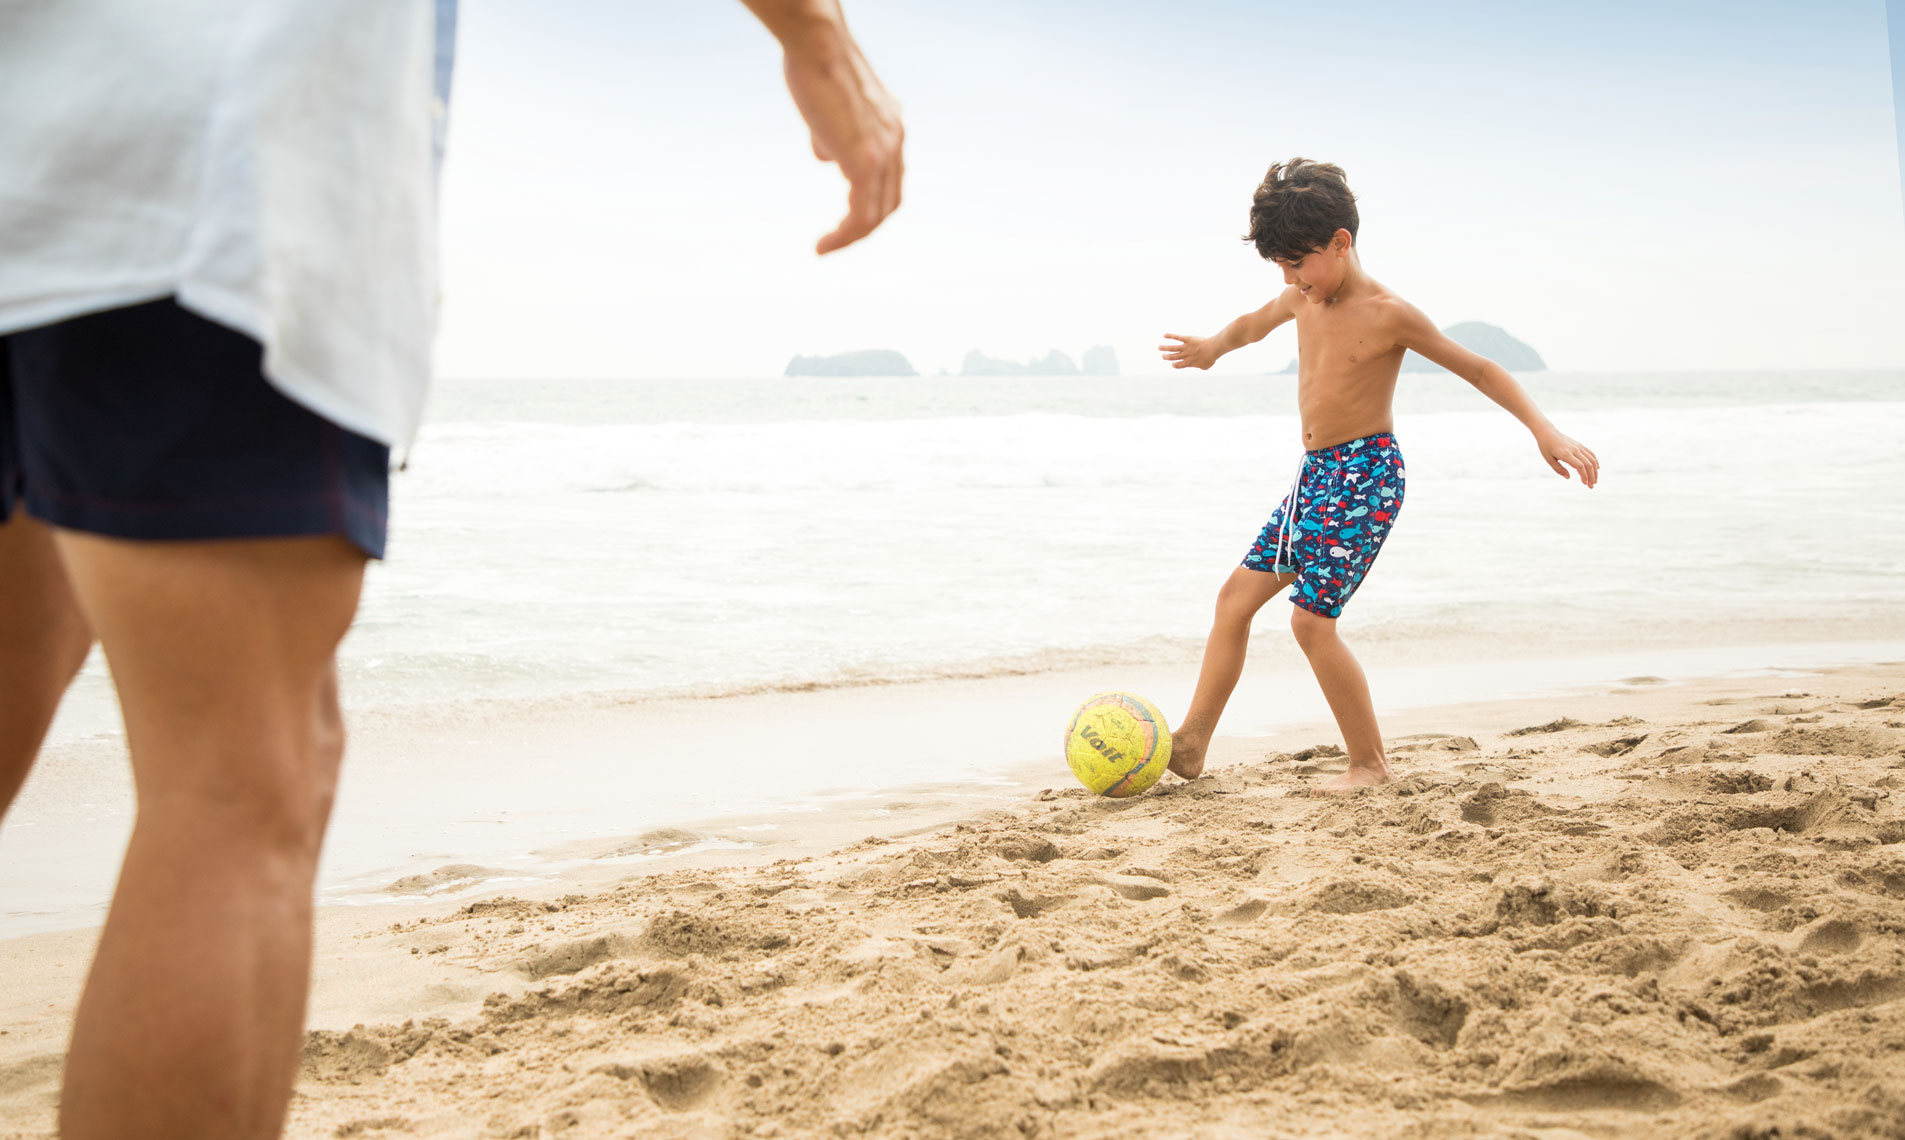 SUDIX-Beach-Soccer-Family-Lifestyle01-AM-web